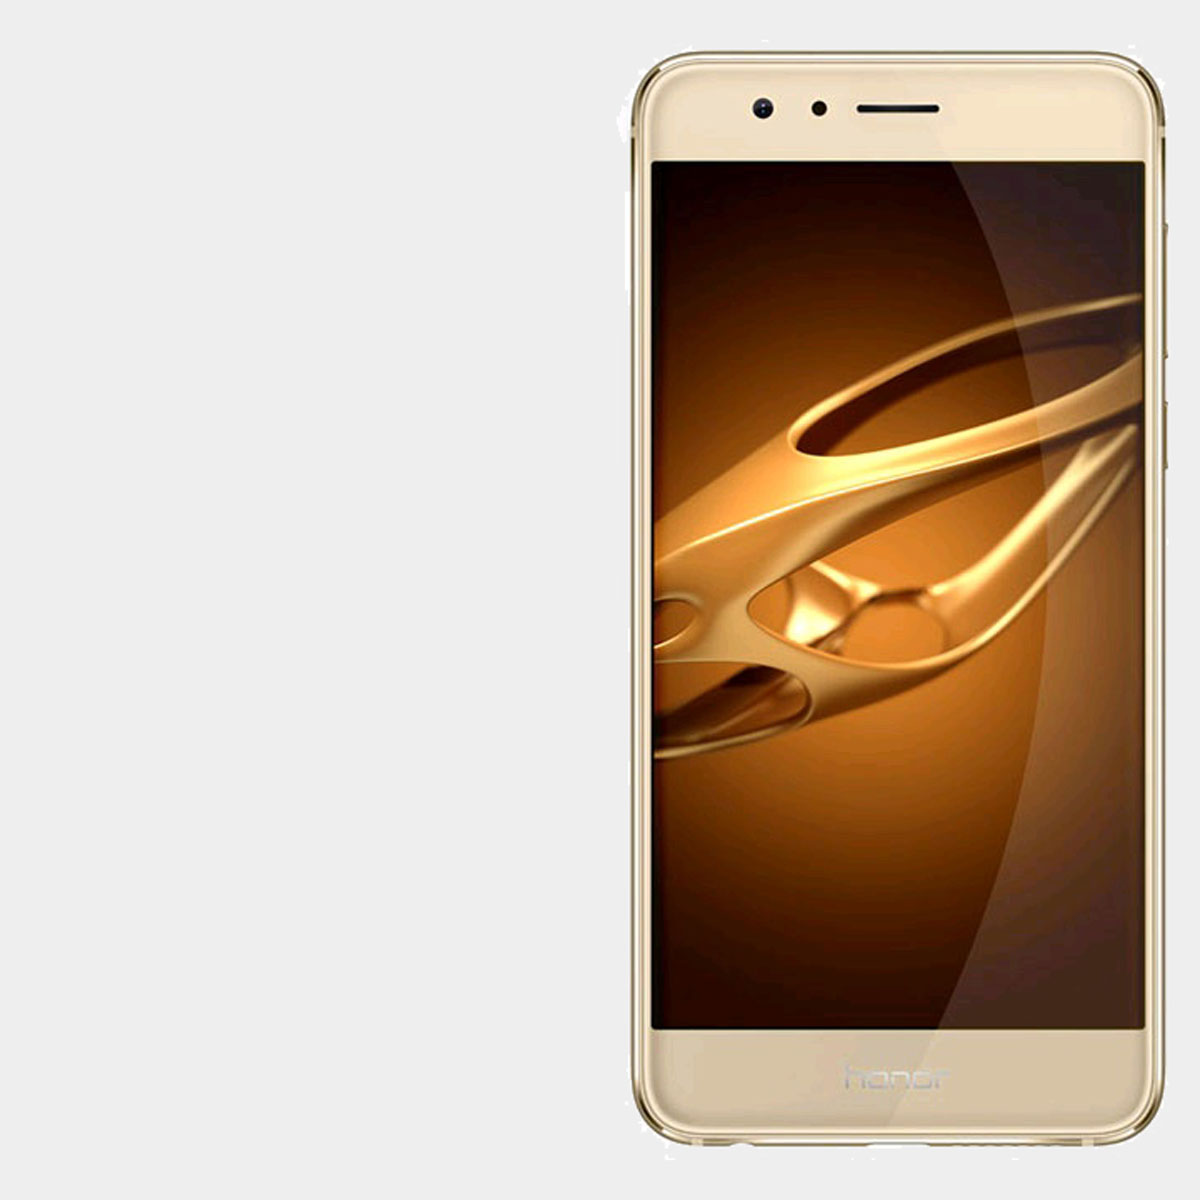 Honor 8 Premium 64GB FRD-L19 Dual Sim mobilní telefon, mobil, smartphone